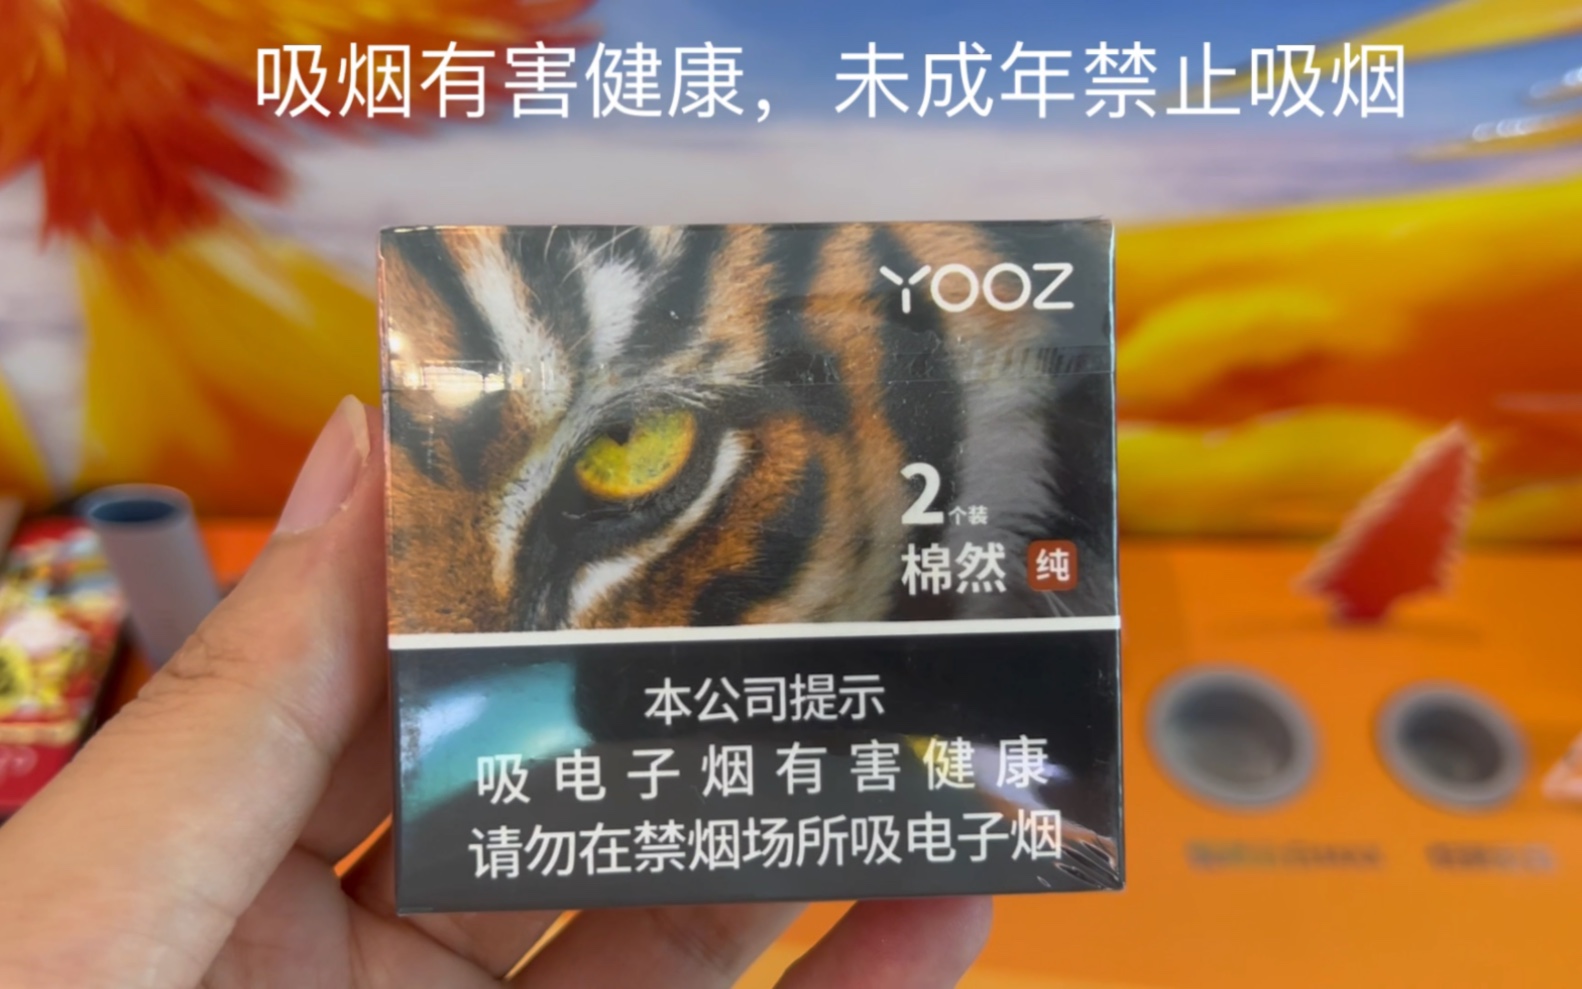 yooz柚子zrow 元物烟弹棉然纯,淡淡的烟草原香,入口丝滑,中段有明显的